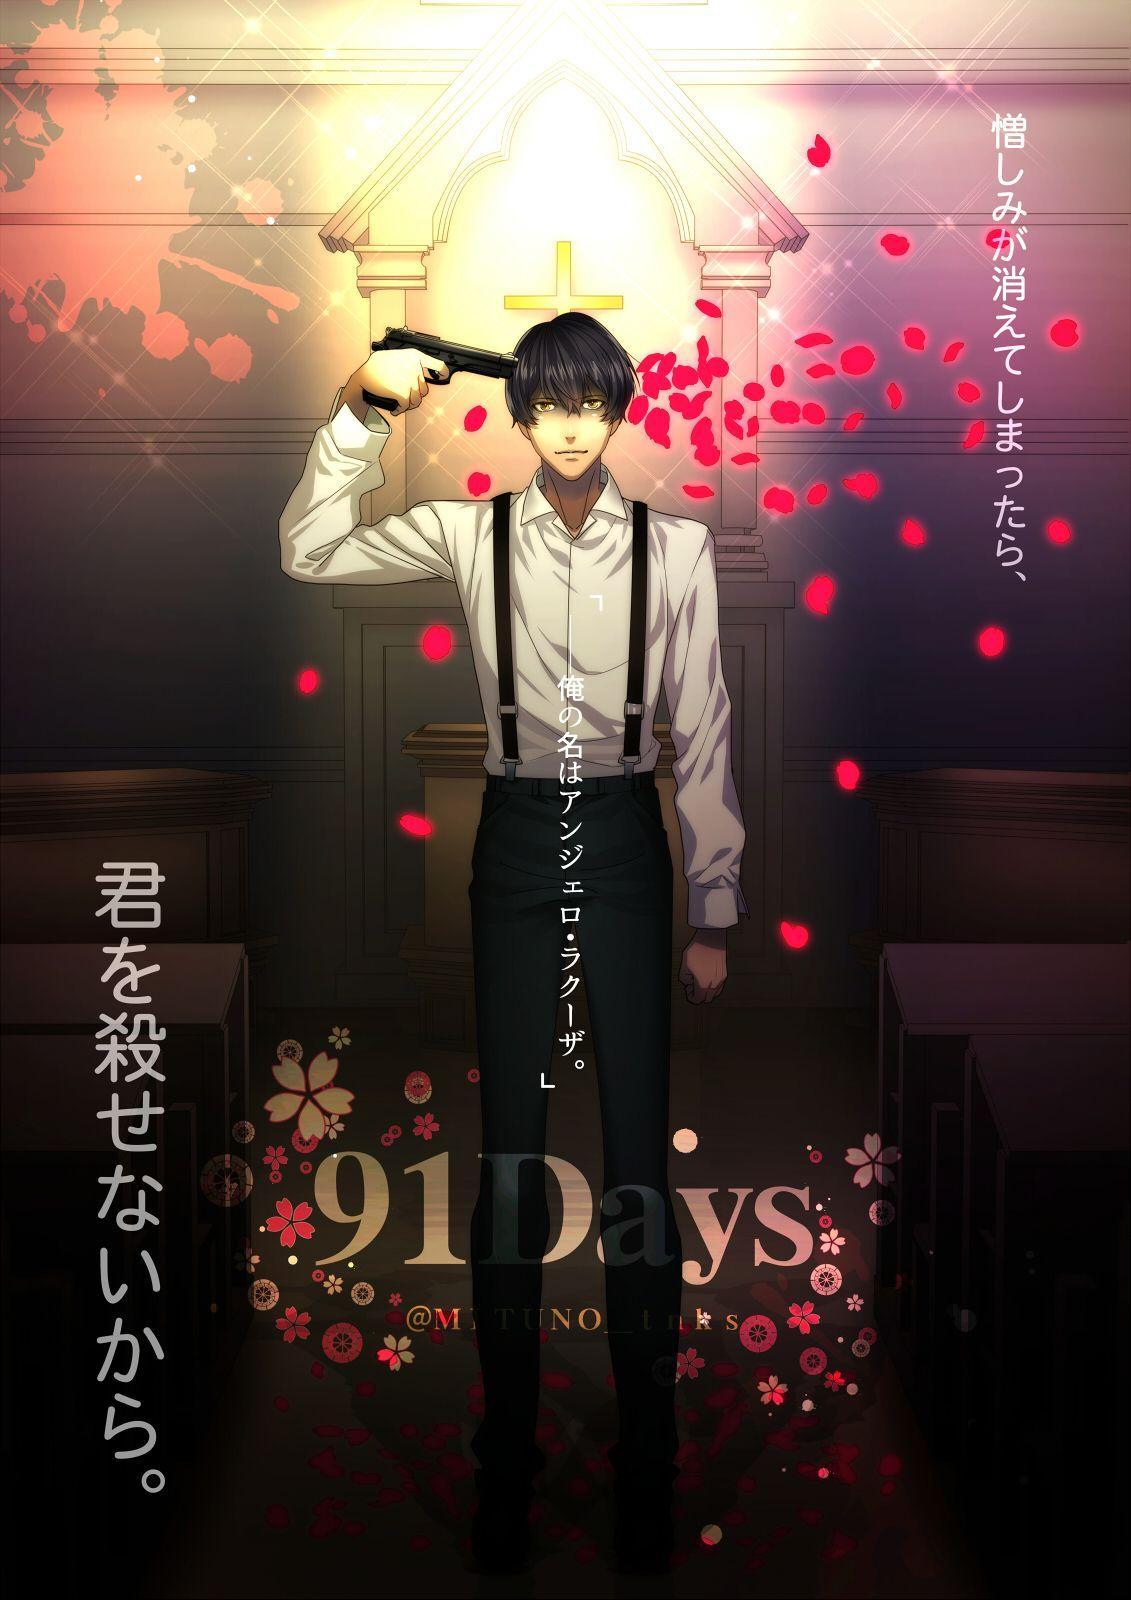 91 Days Image #2427946 - Zerochan Anime Image Board